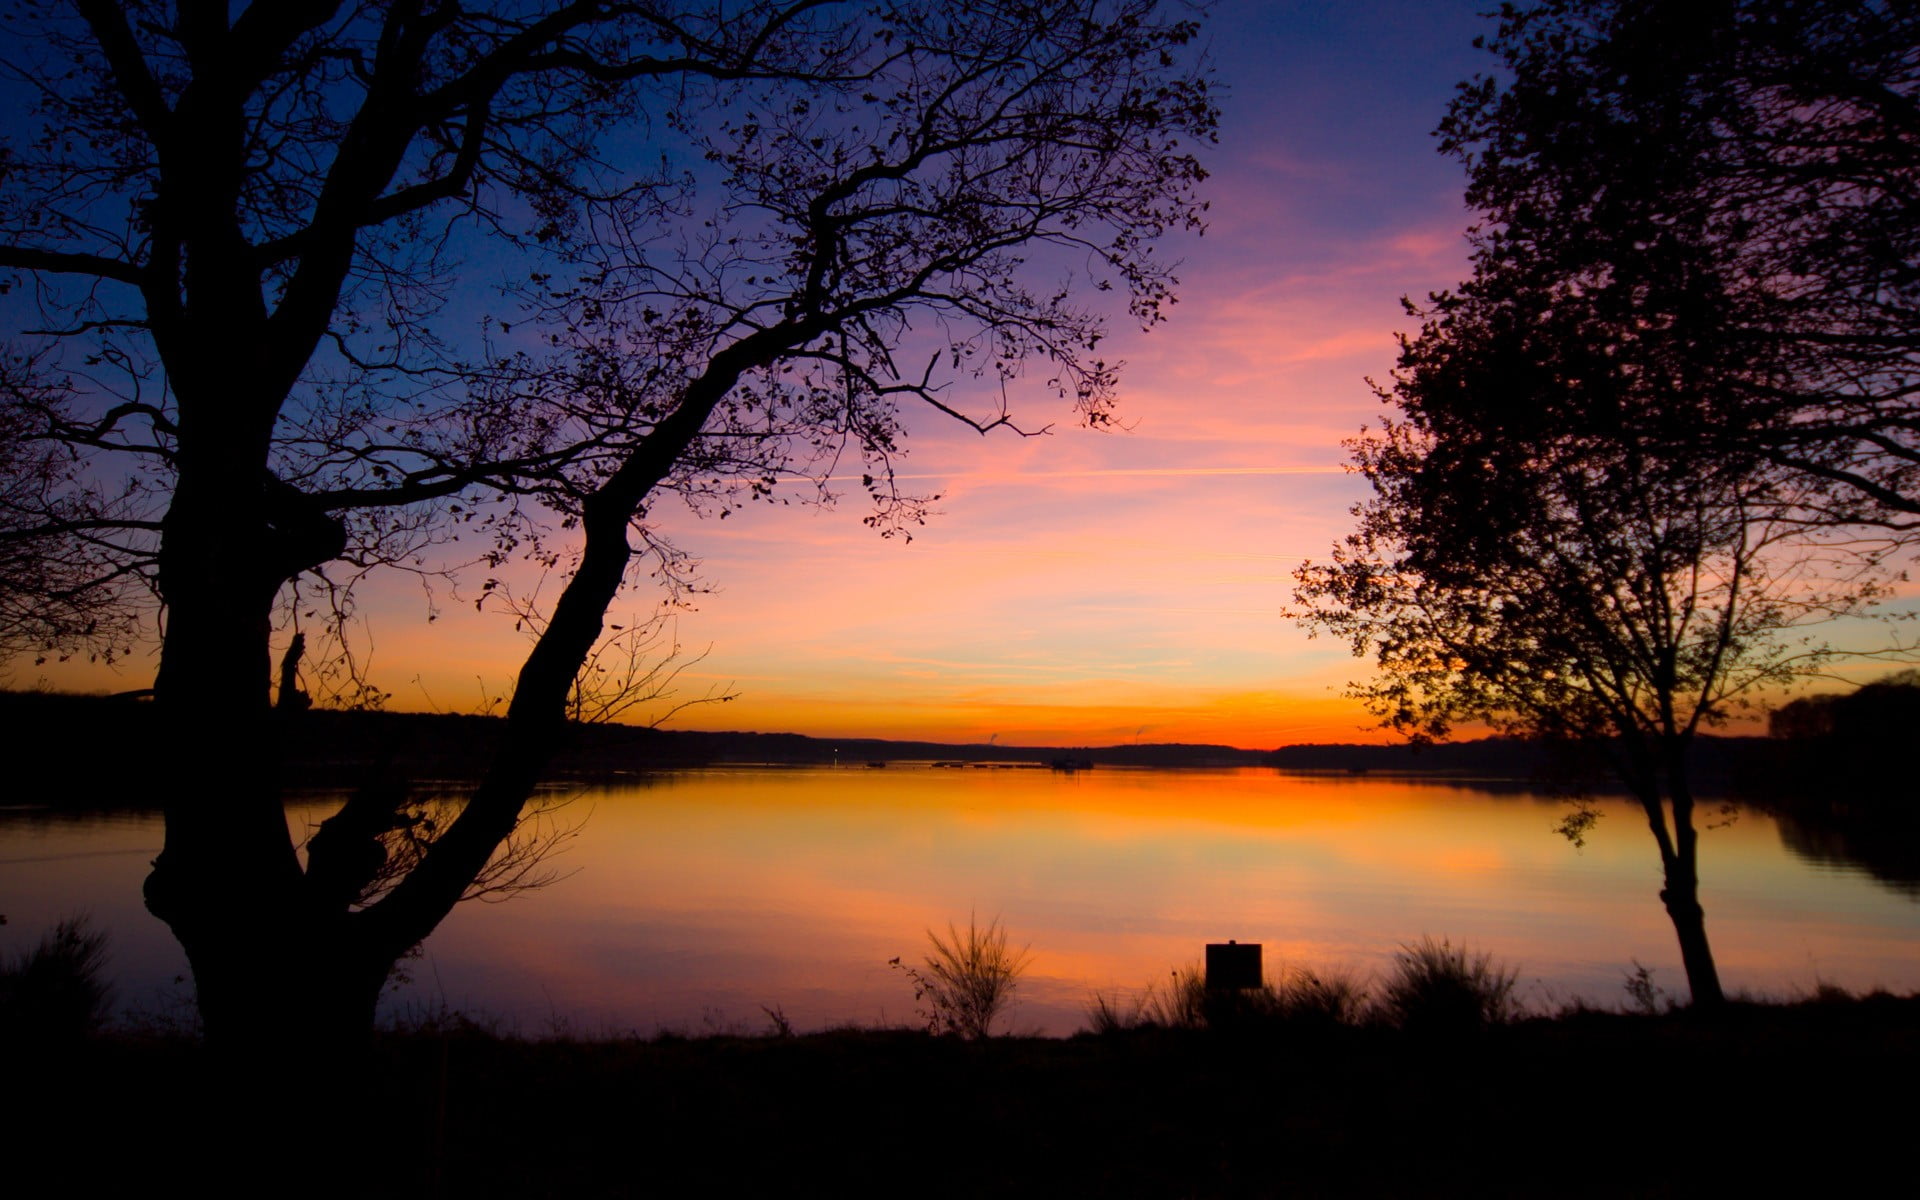 landscape, sunset, dusk, lake, trees, purple sky, silhouette